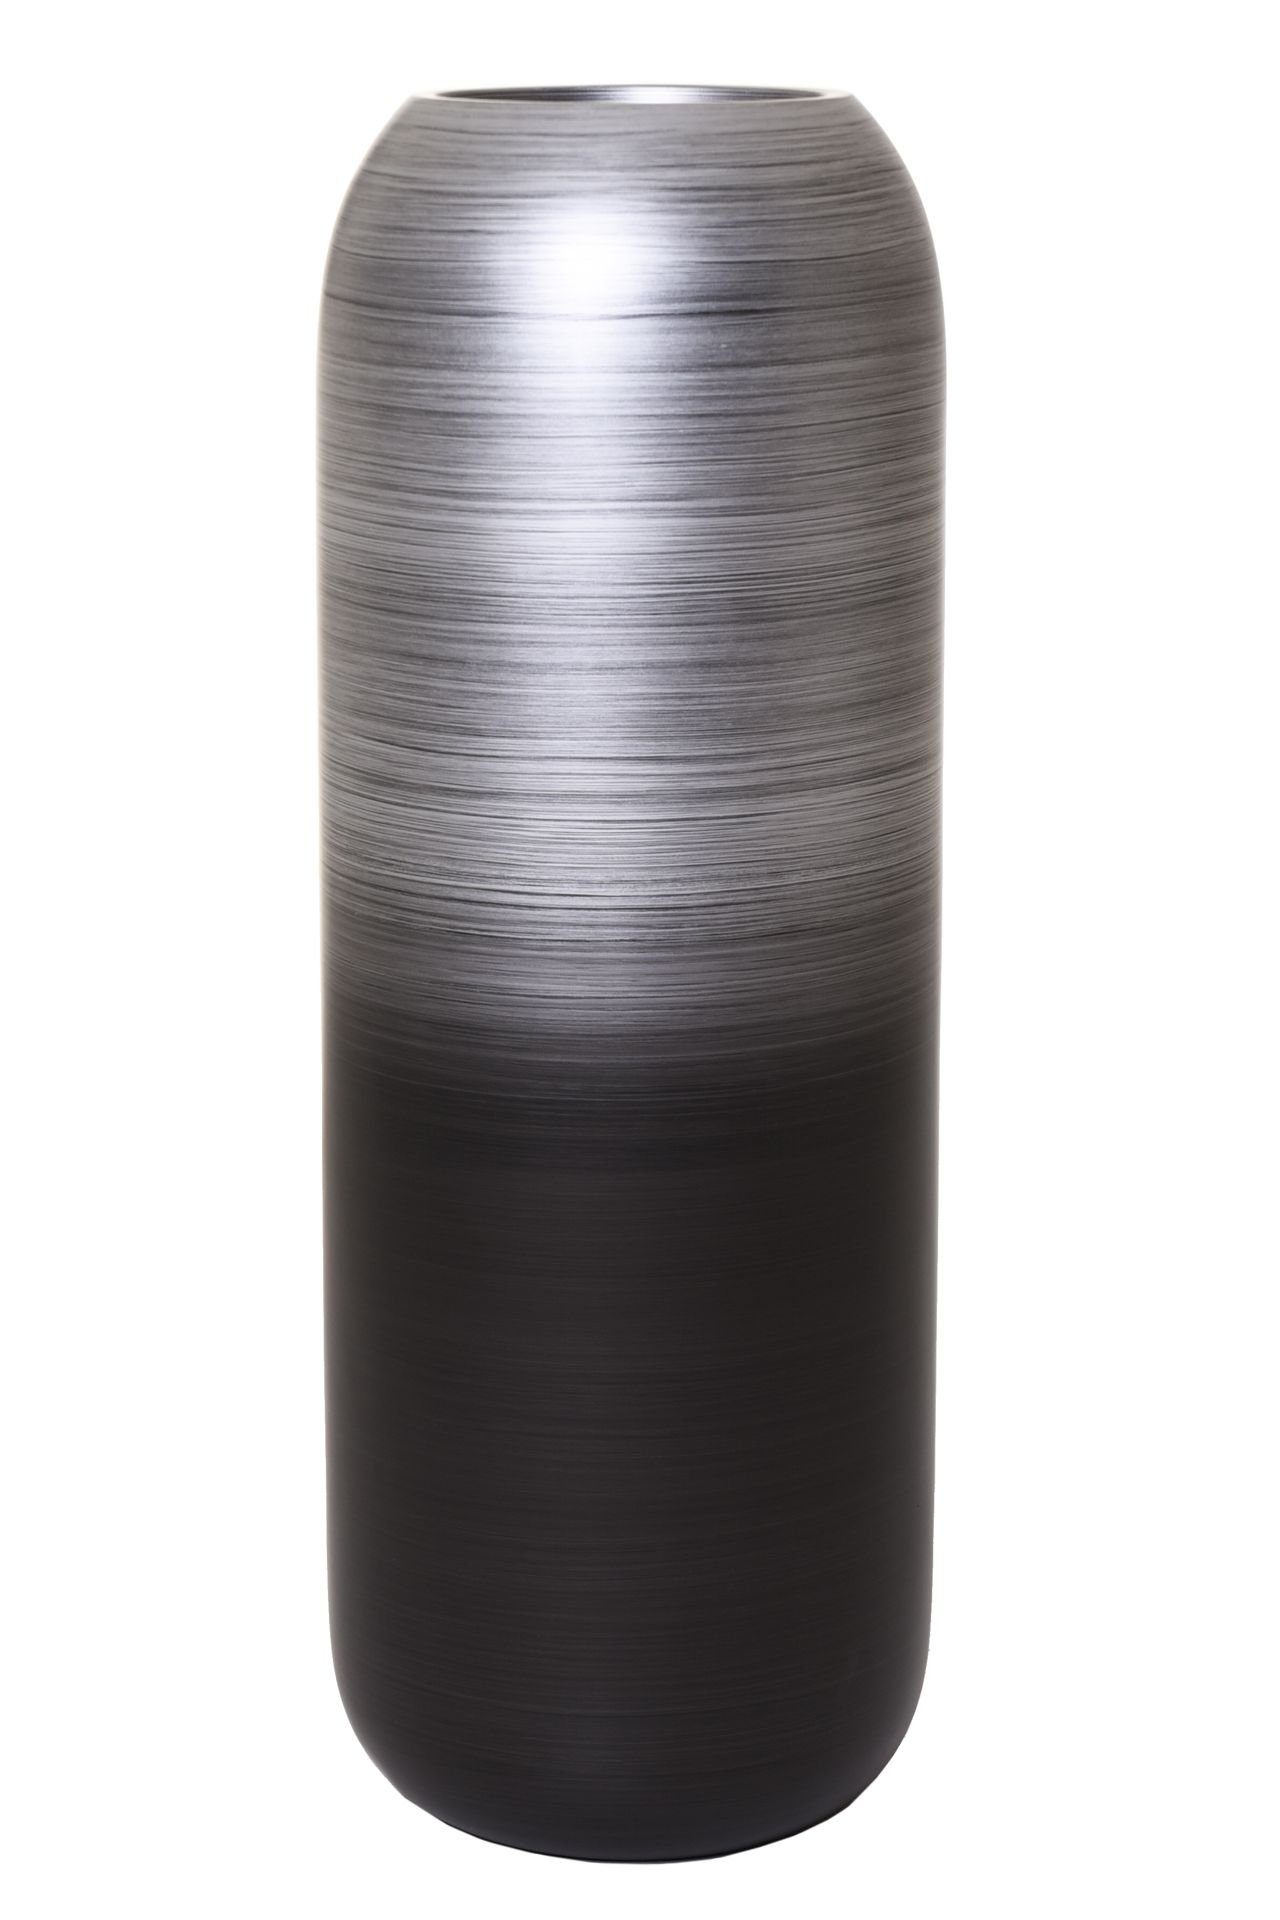 Silber Schwarz Bodenvase VIVANNO Fiberglas Seidenmatt Bodenvase CHRONO - Schwarz-Silber Pflanzkübel